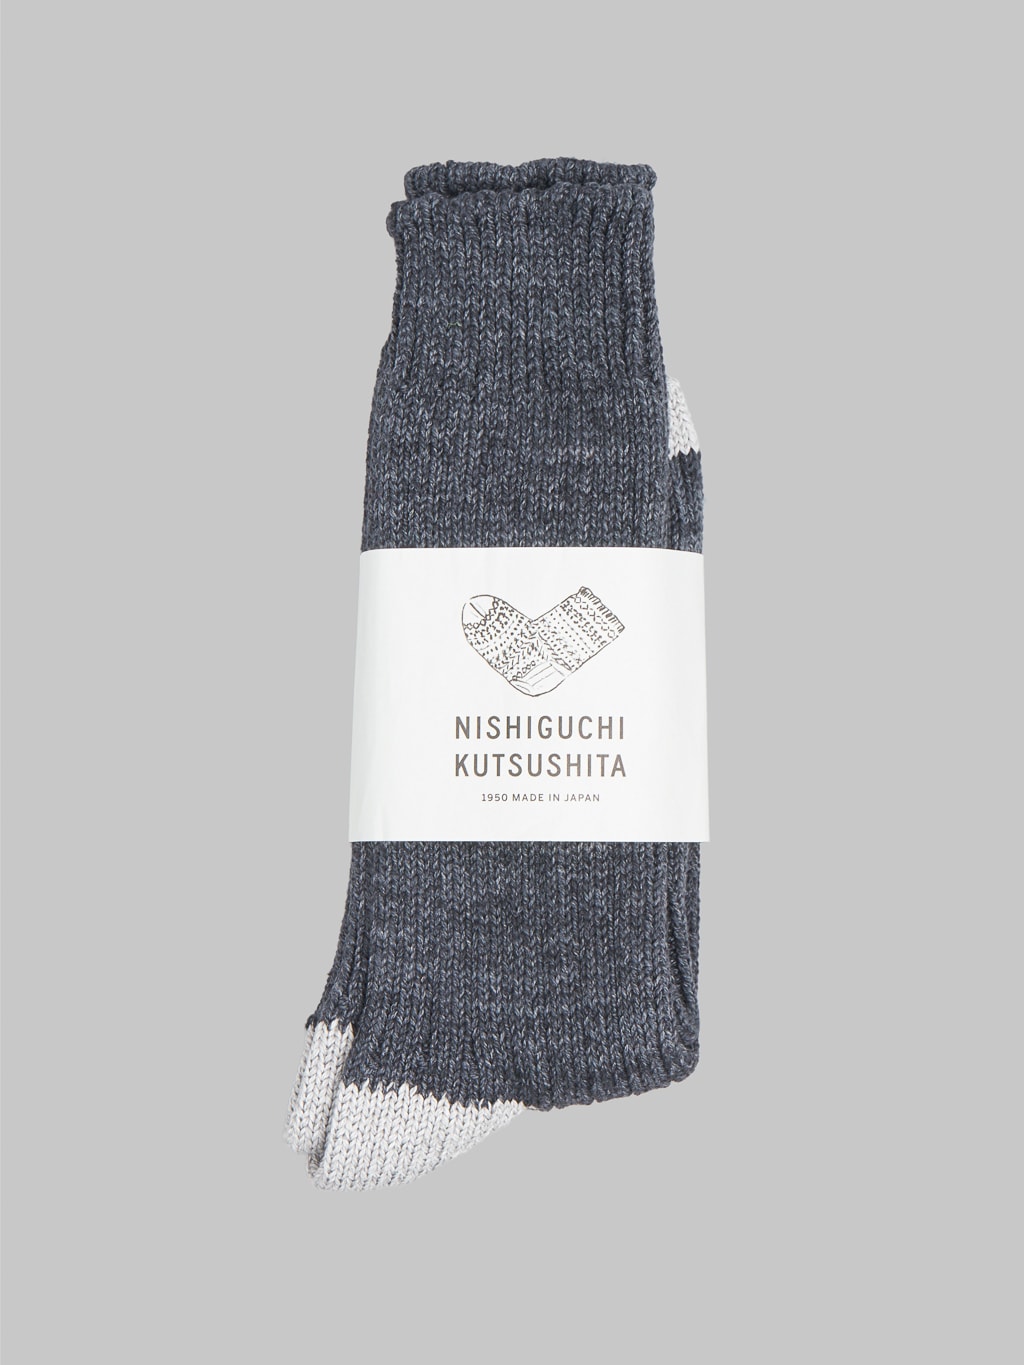 Nishiguchi Kutsushita Recycled Cotton Ribbed Socks Charcoal Japan Made